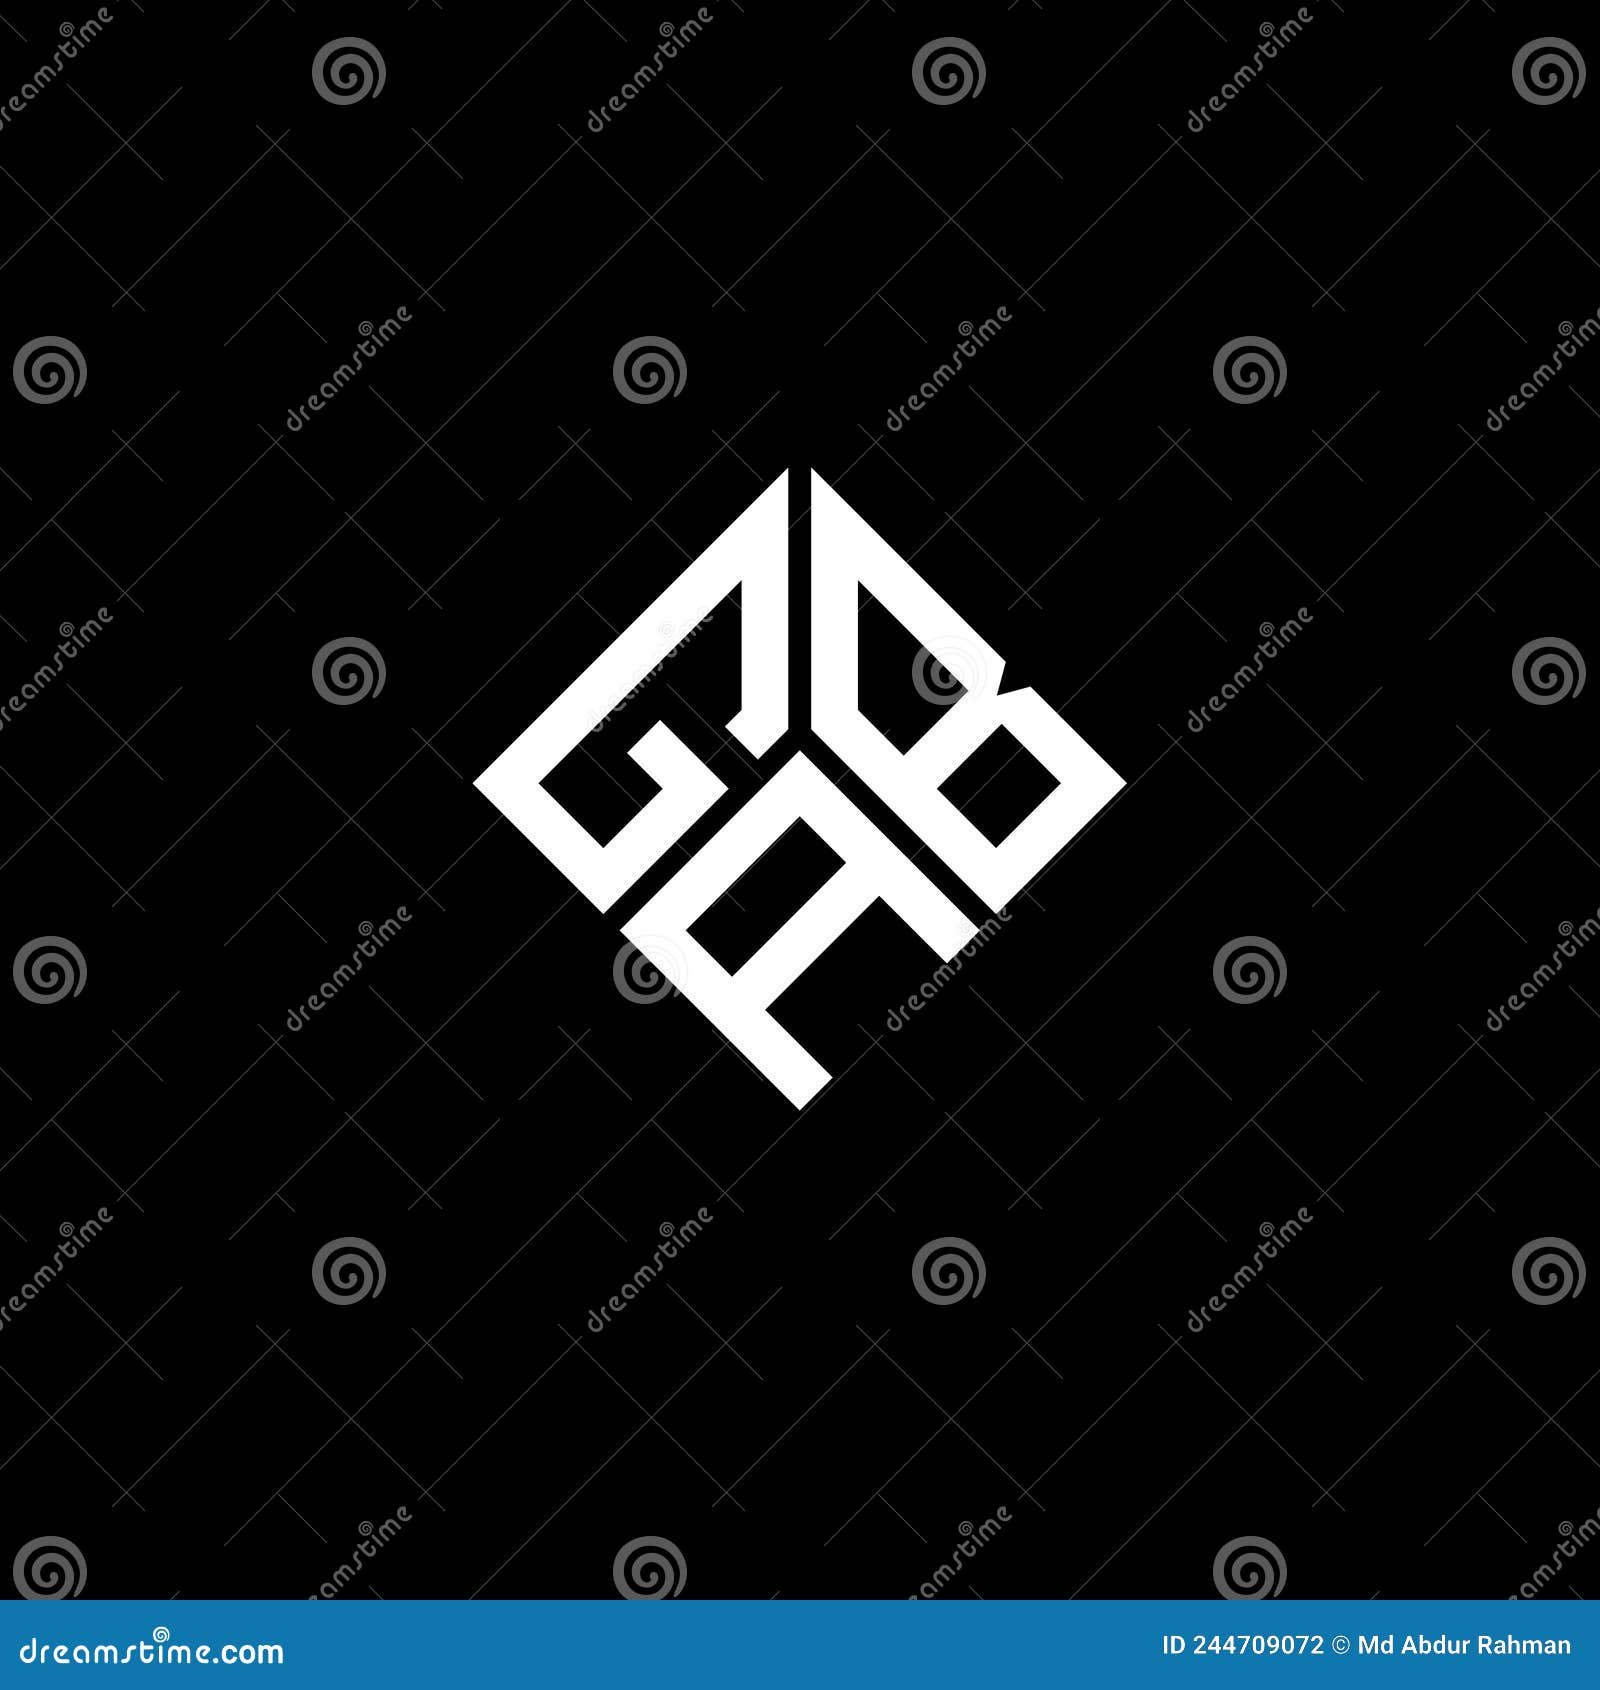 gab letter logo  on black background. gab creative initials letter logo concept. gab letter 